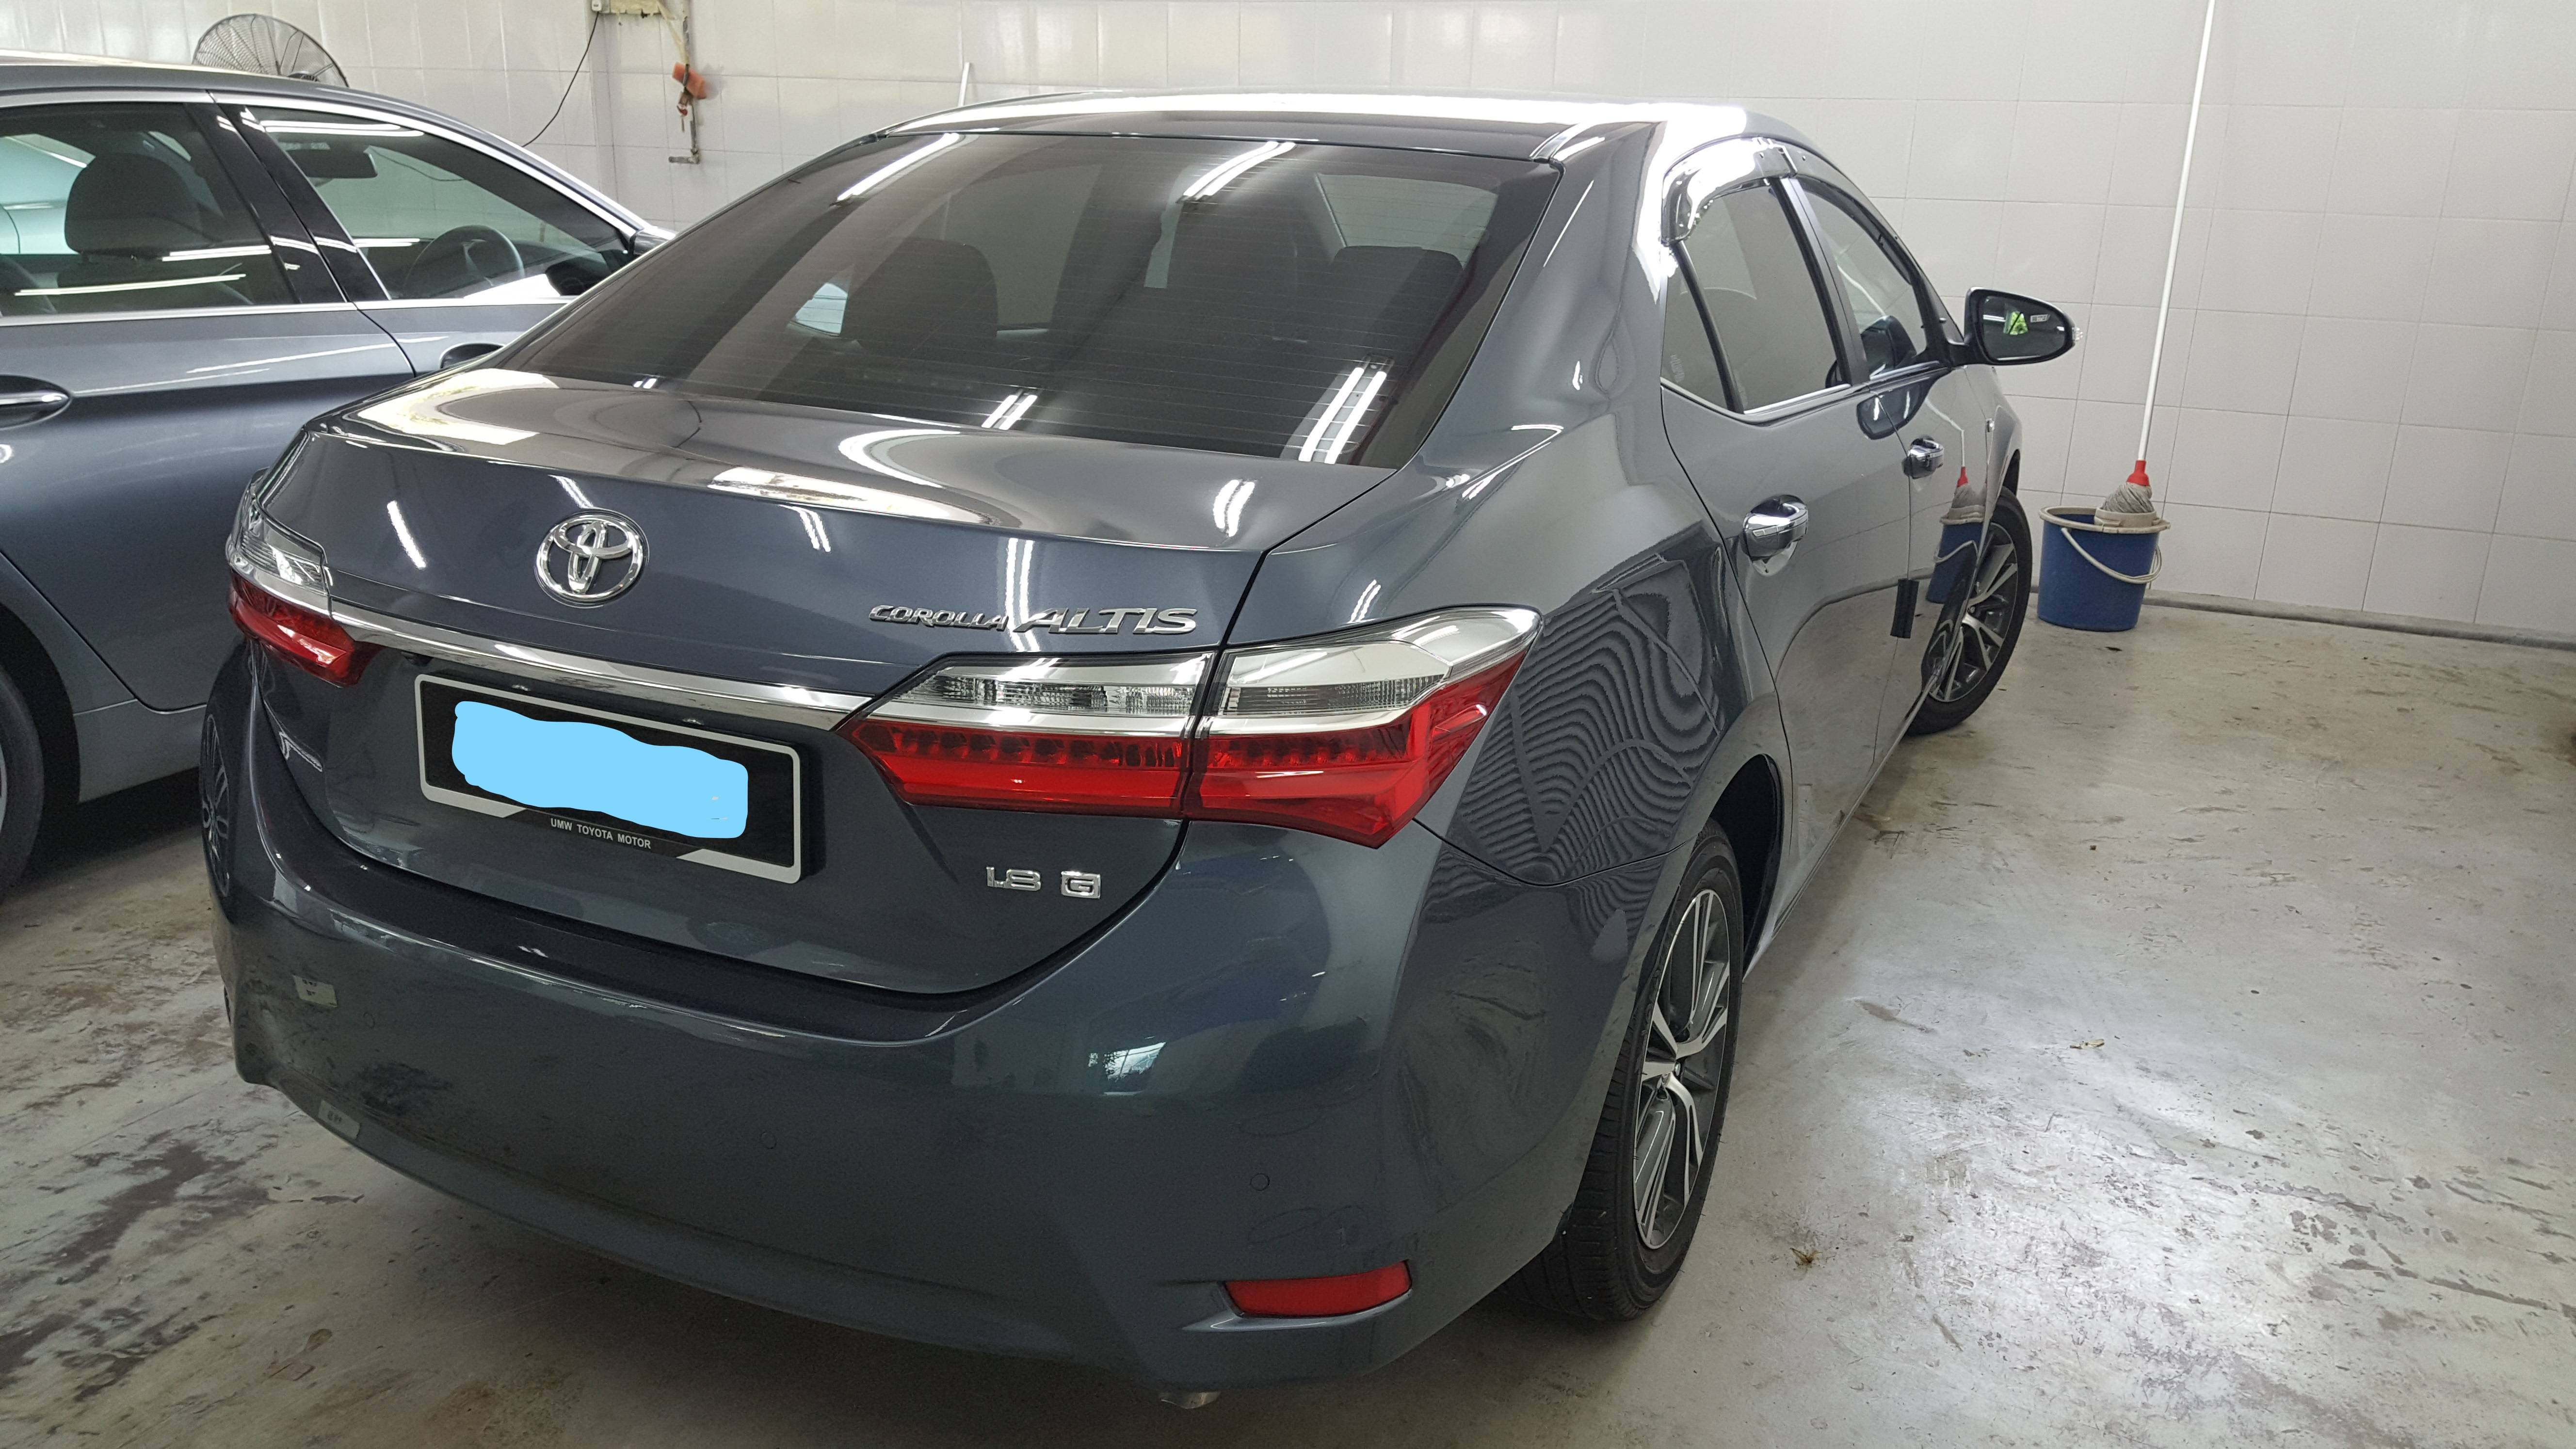 Terpakai 2017 Toyota Corolla 1.8G untuk Dijual